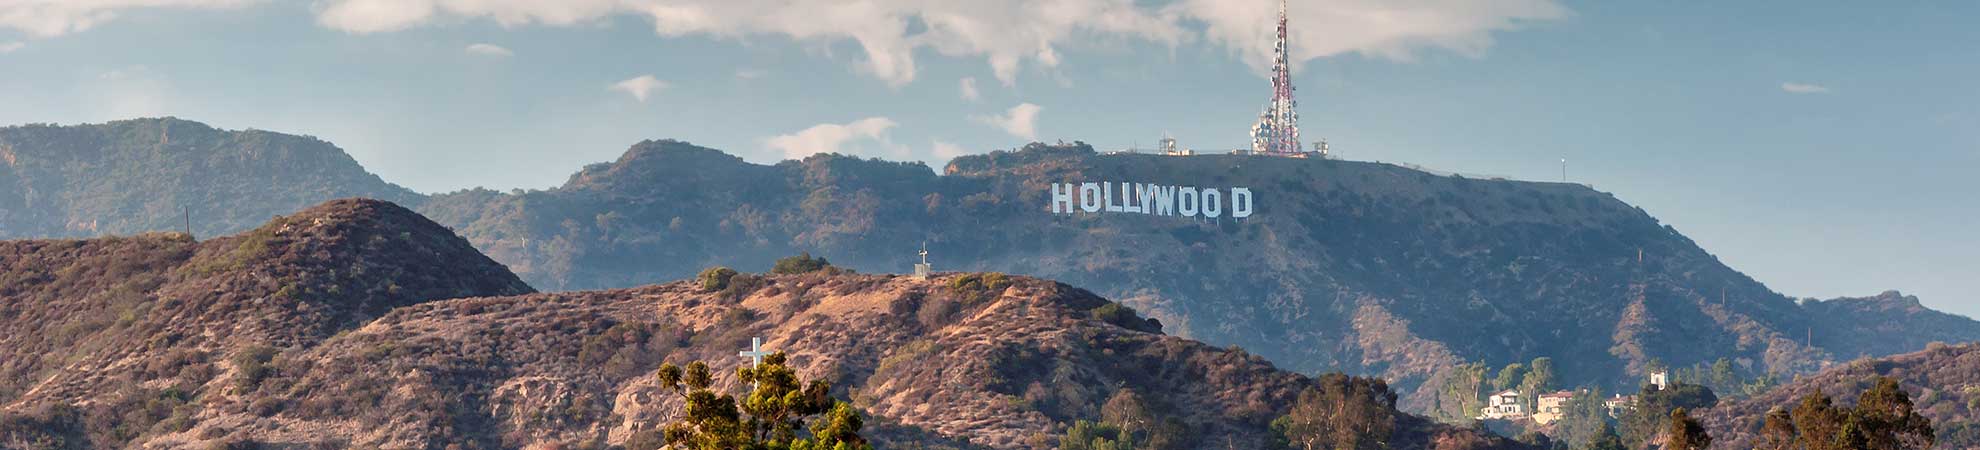 Voyage Hollywood